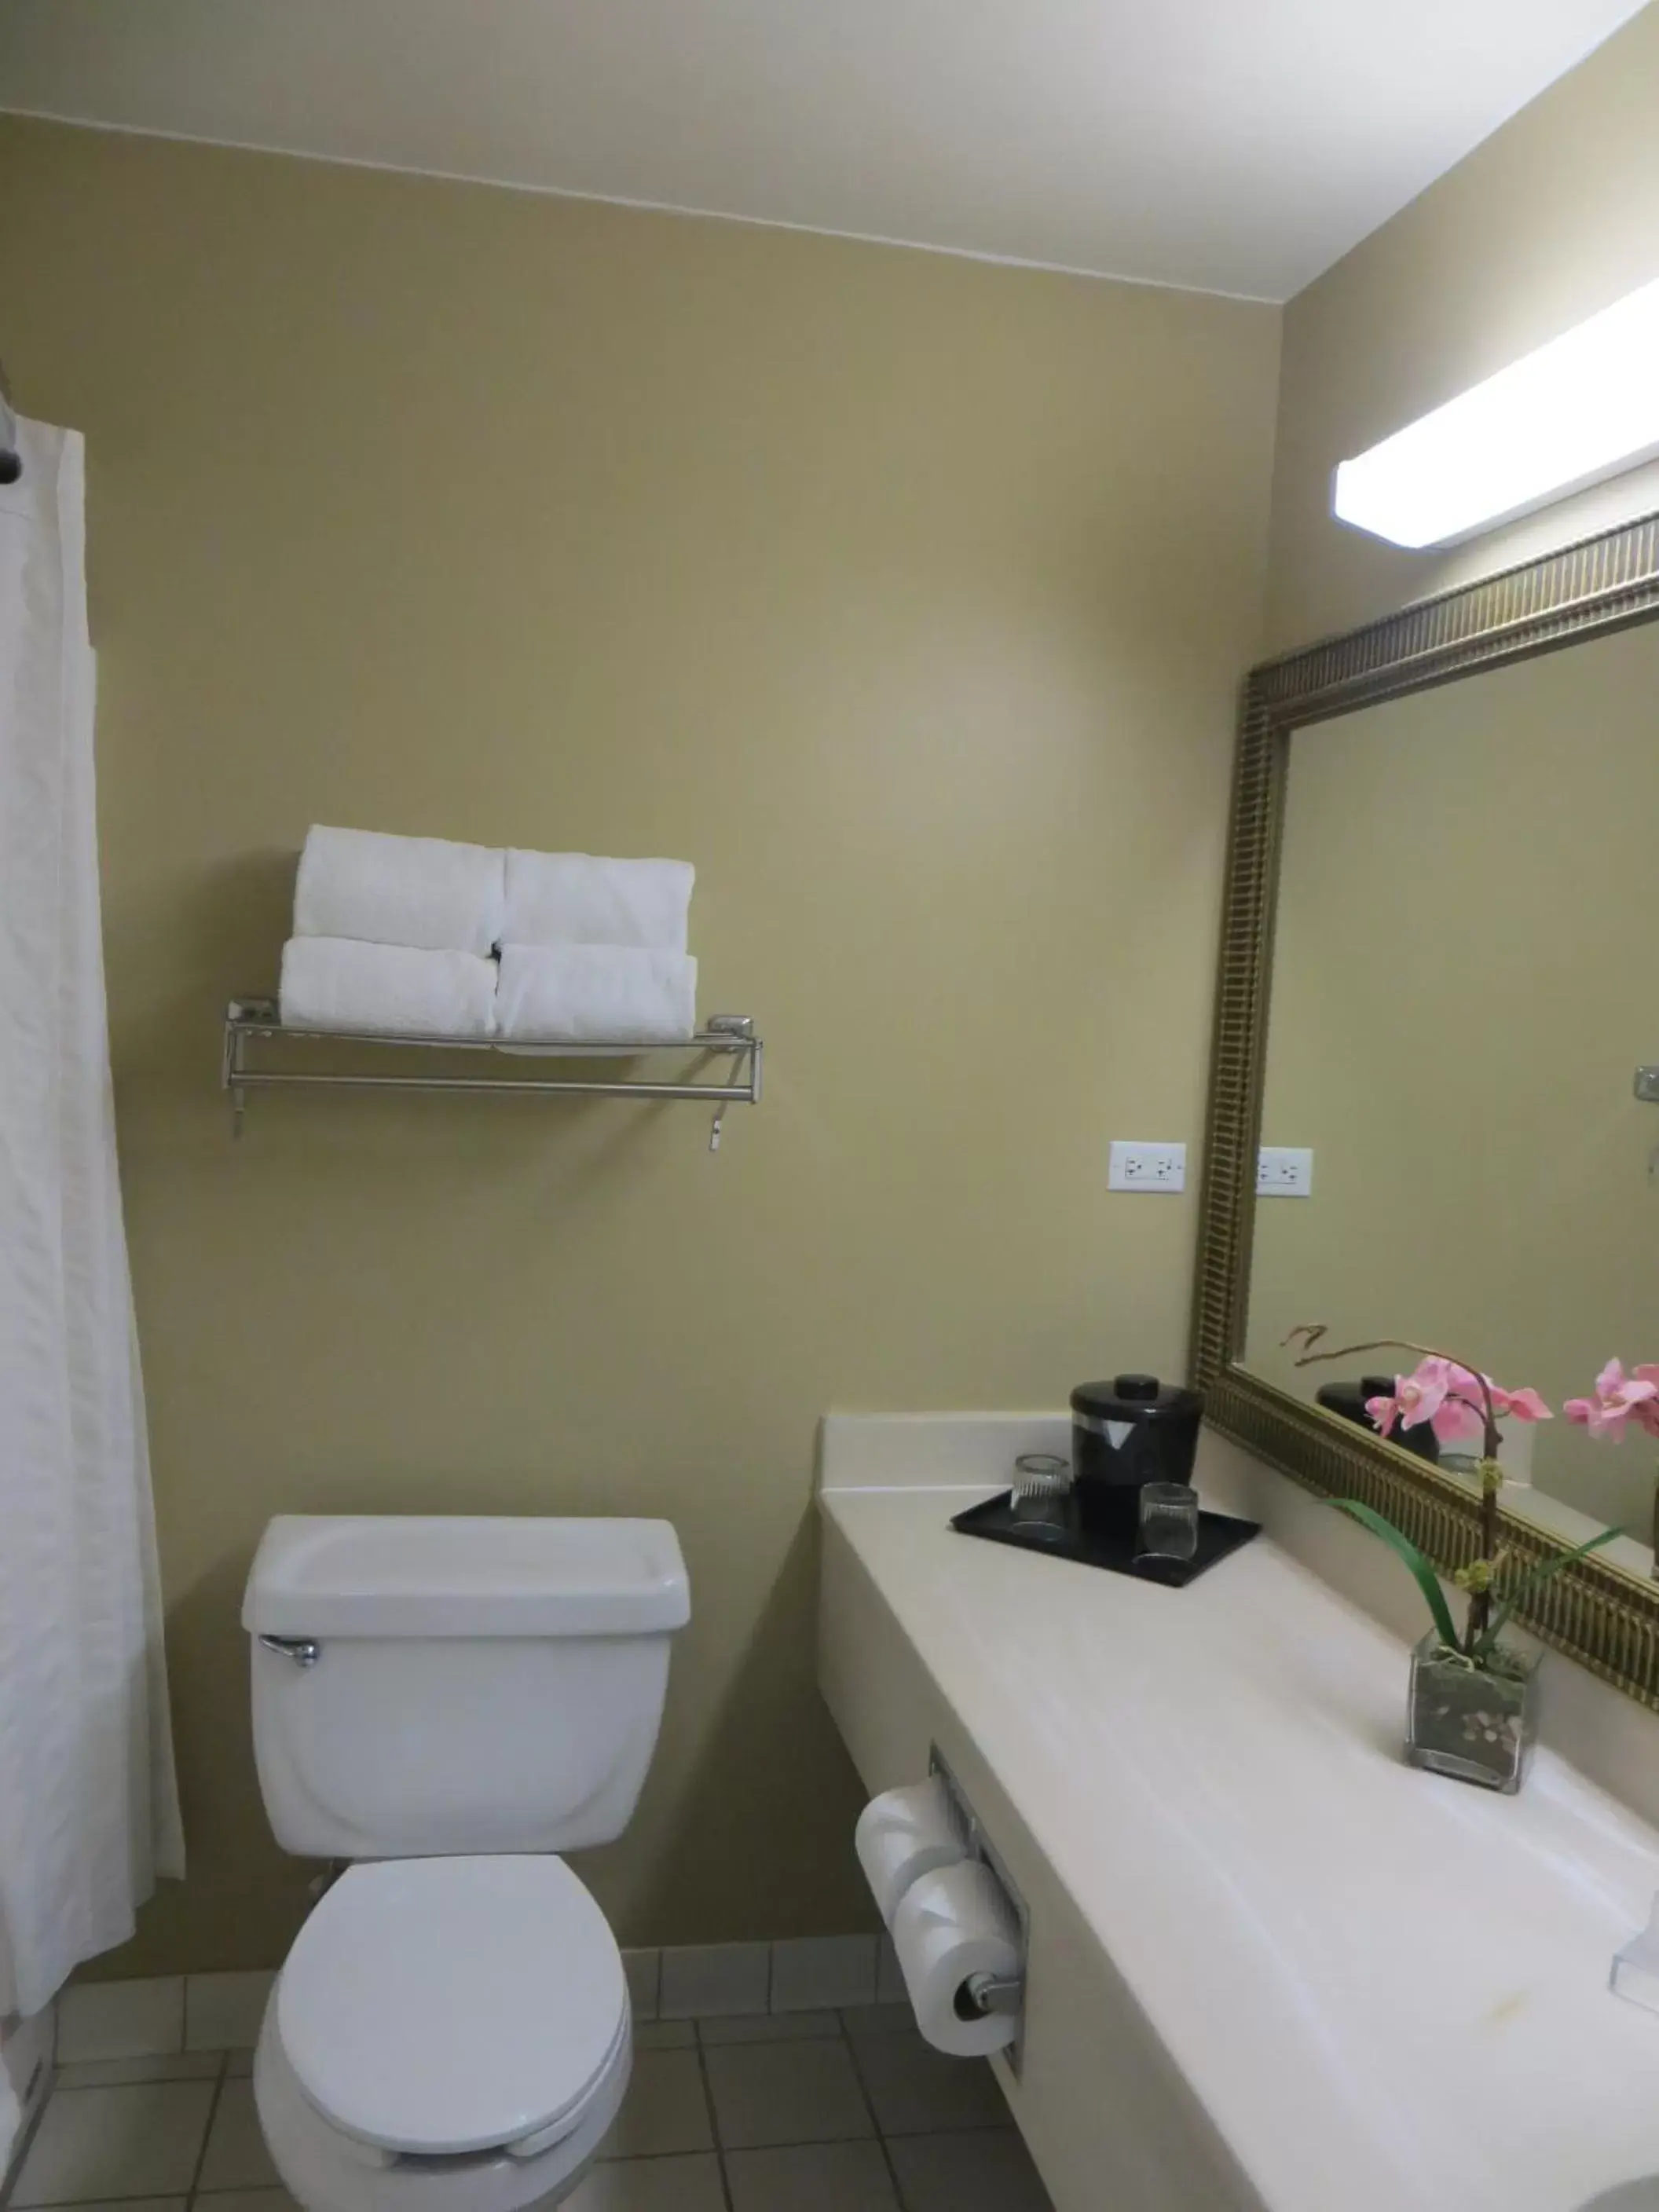 Bathroom in Country Inn & Suites by Radisson, Gurnee, IL